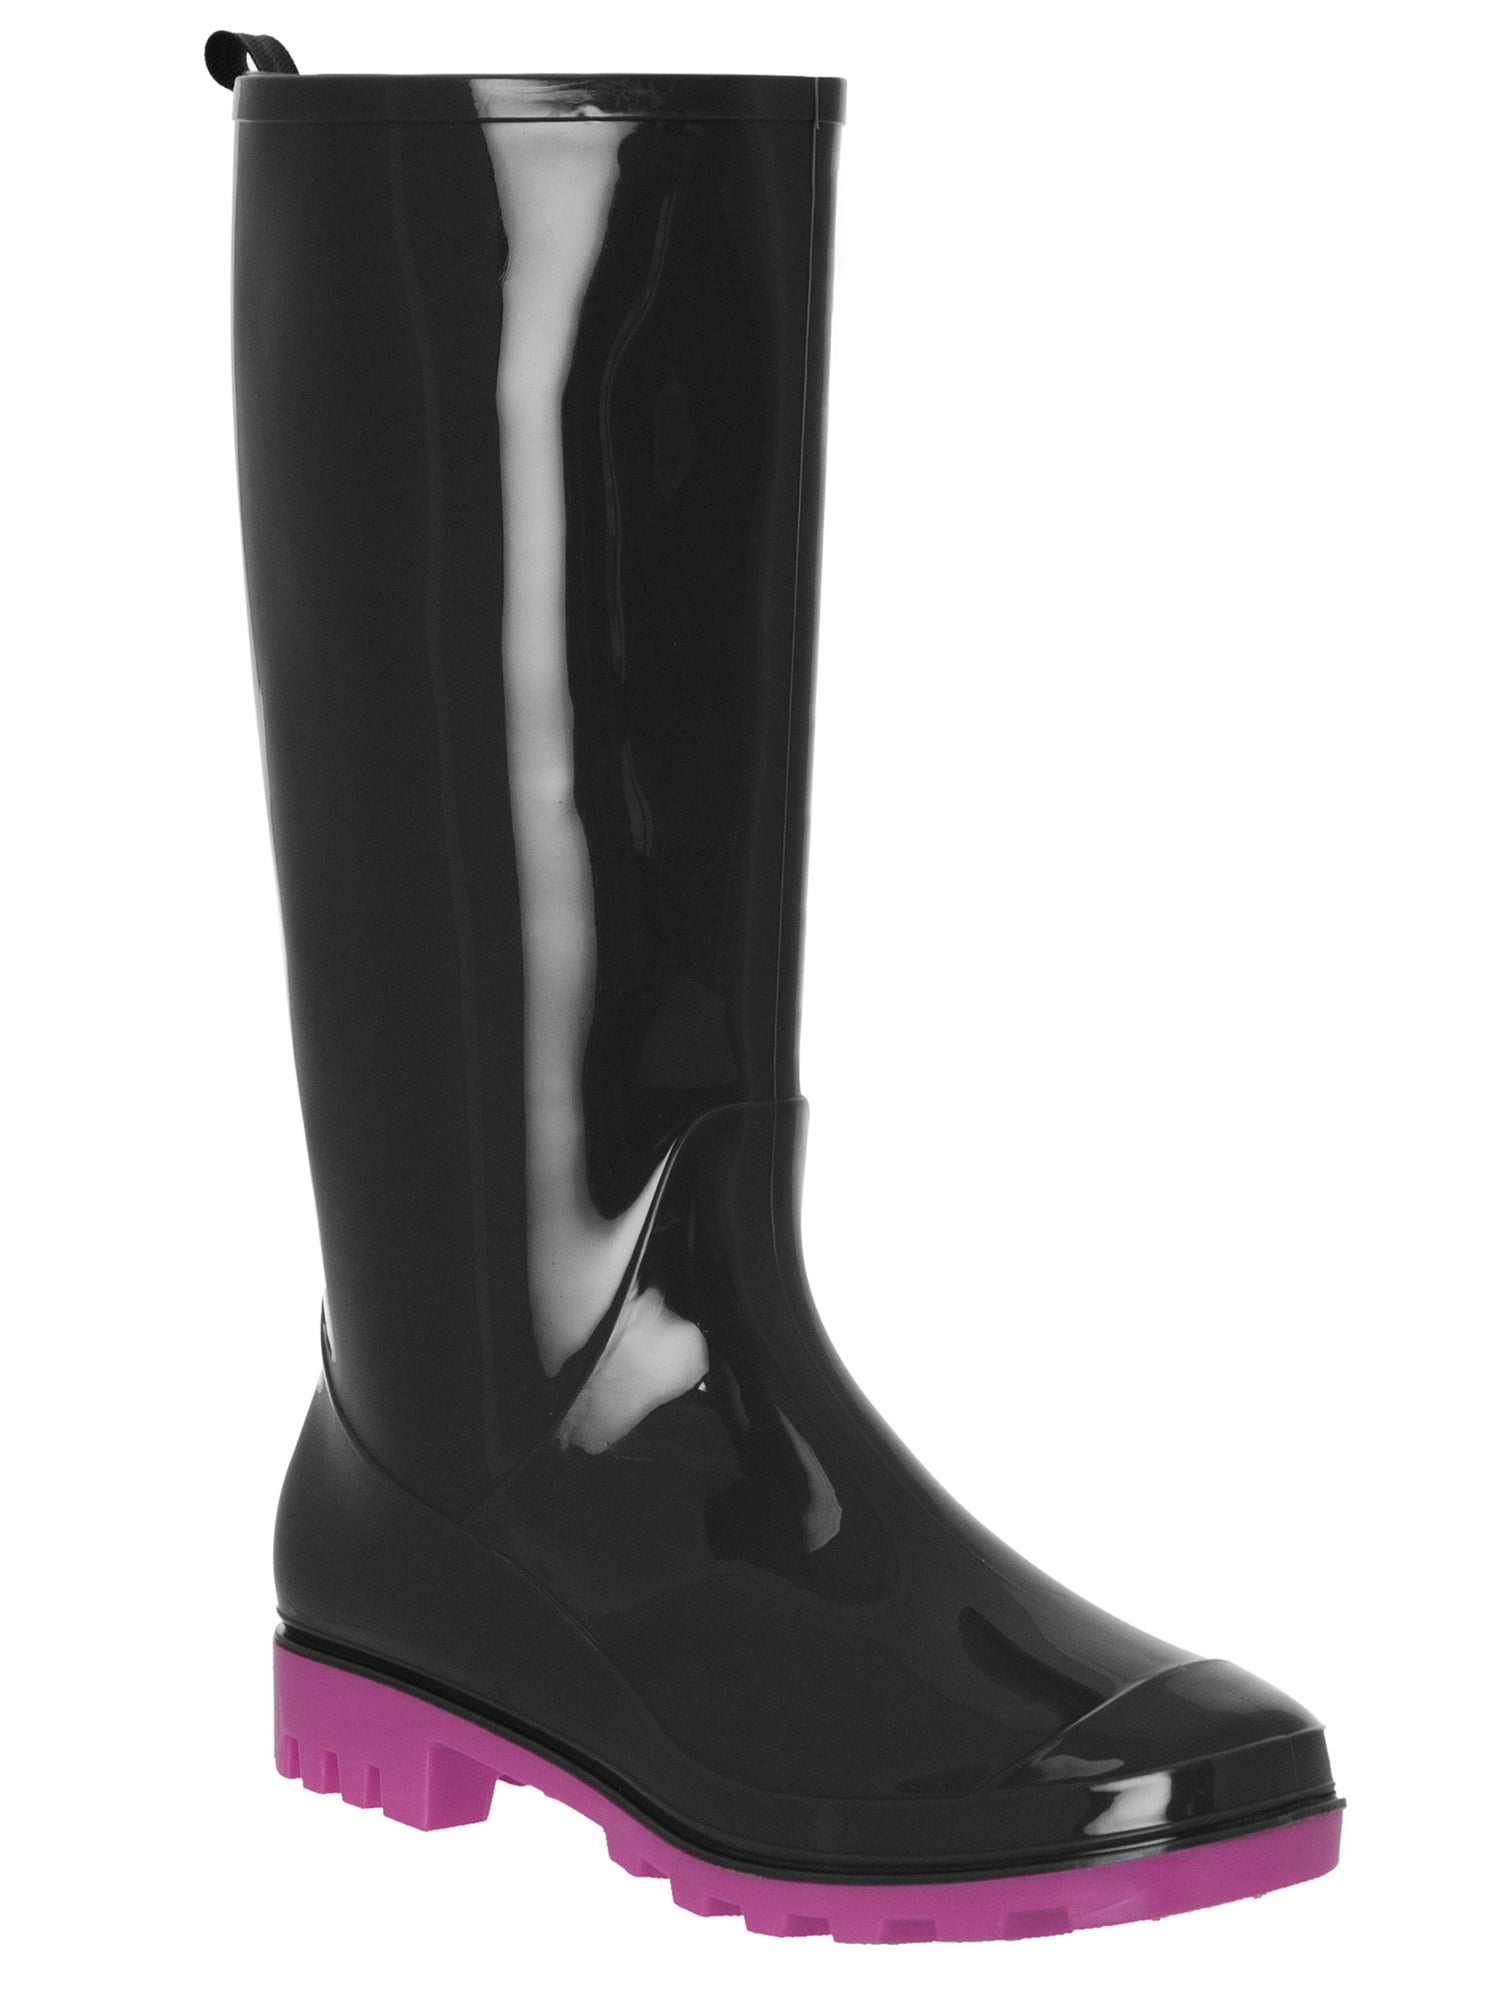 capelli womens rain boots